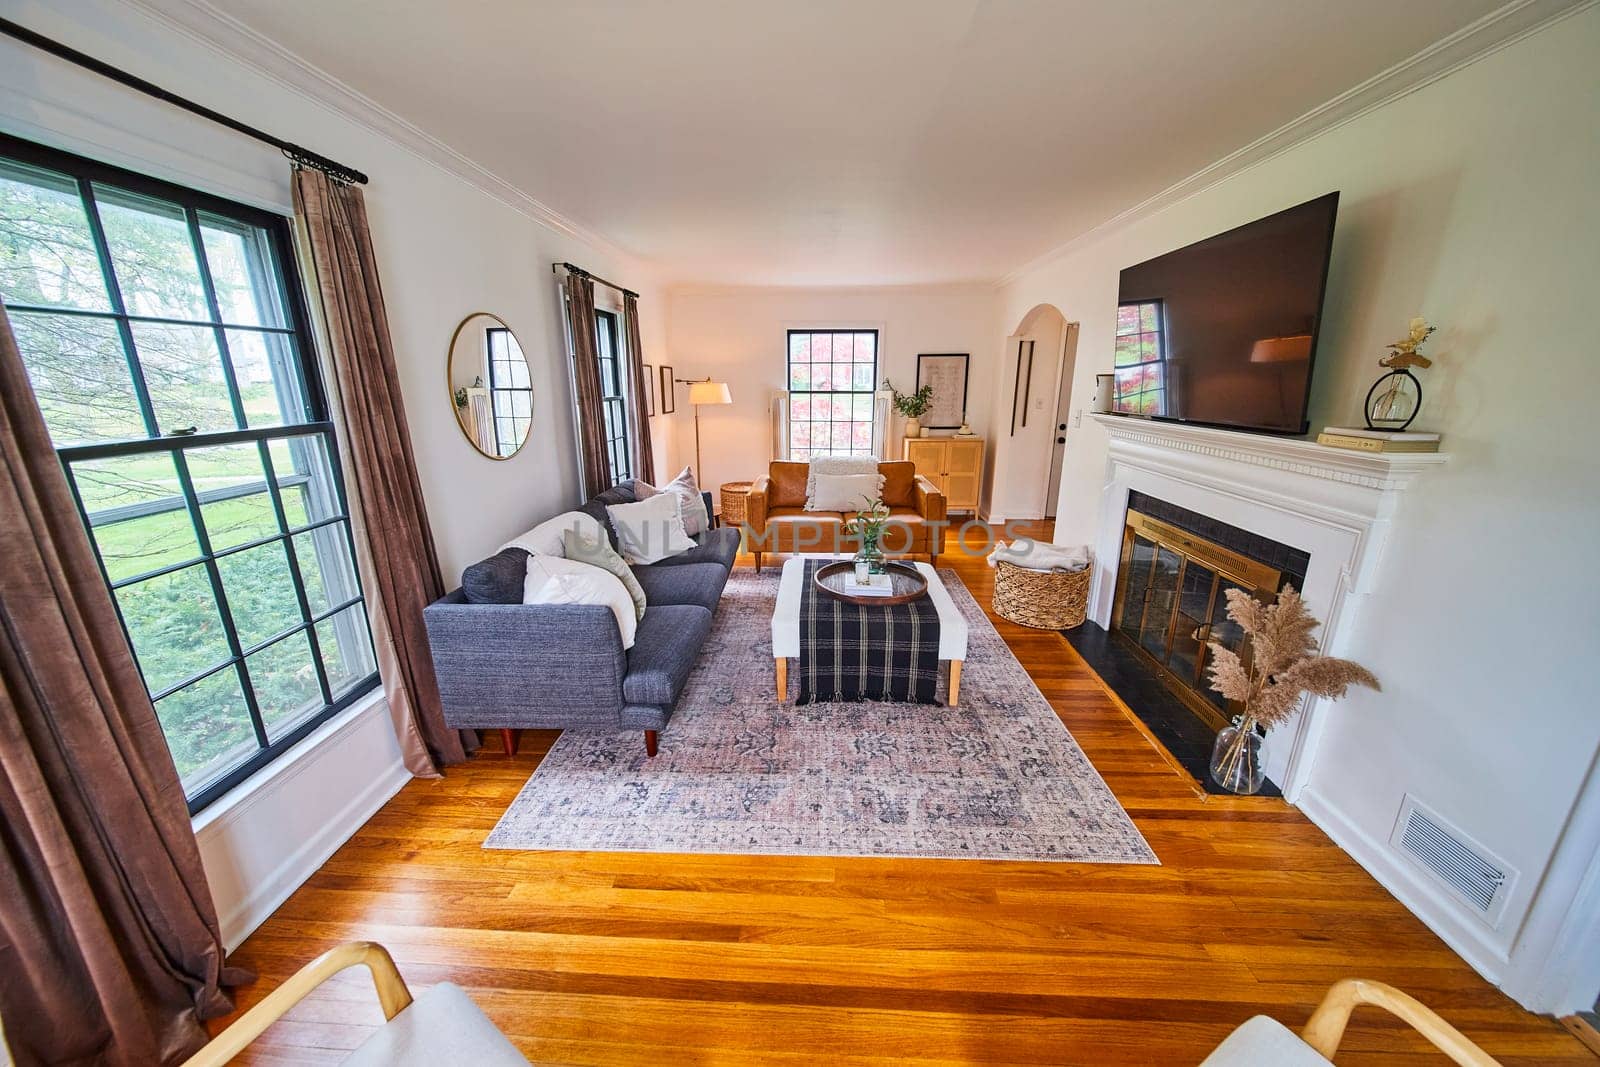 Spacious, sunlit living room blending modern and classic design in Fort Wayne home.